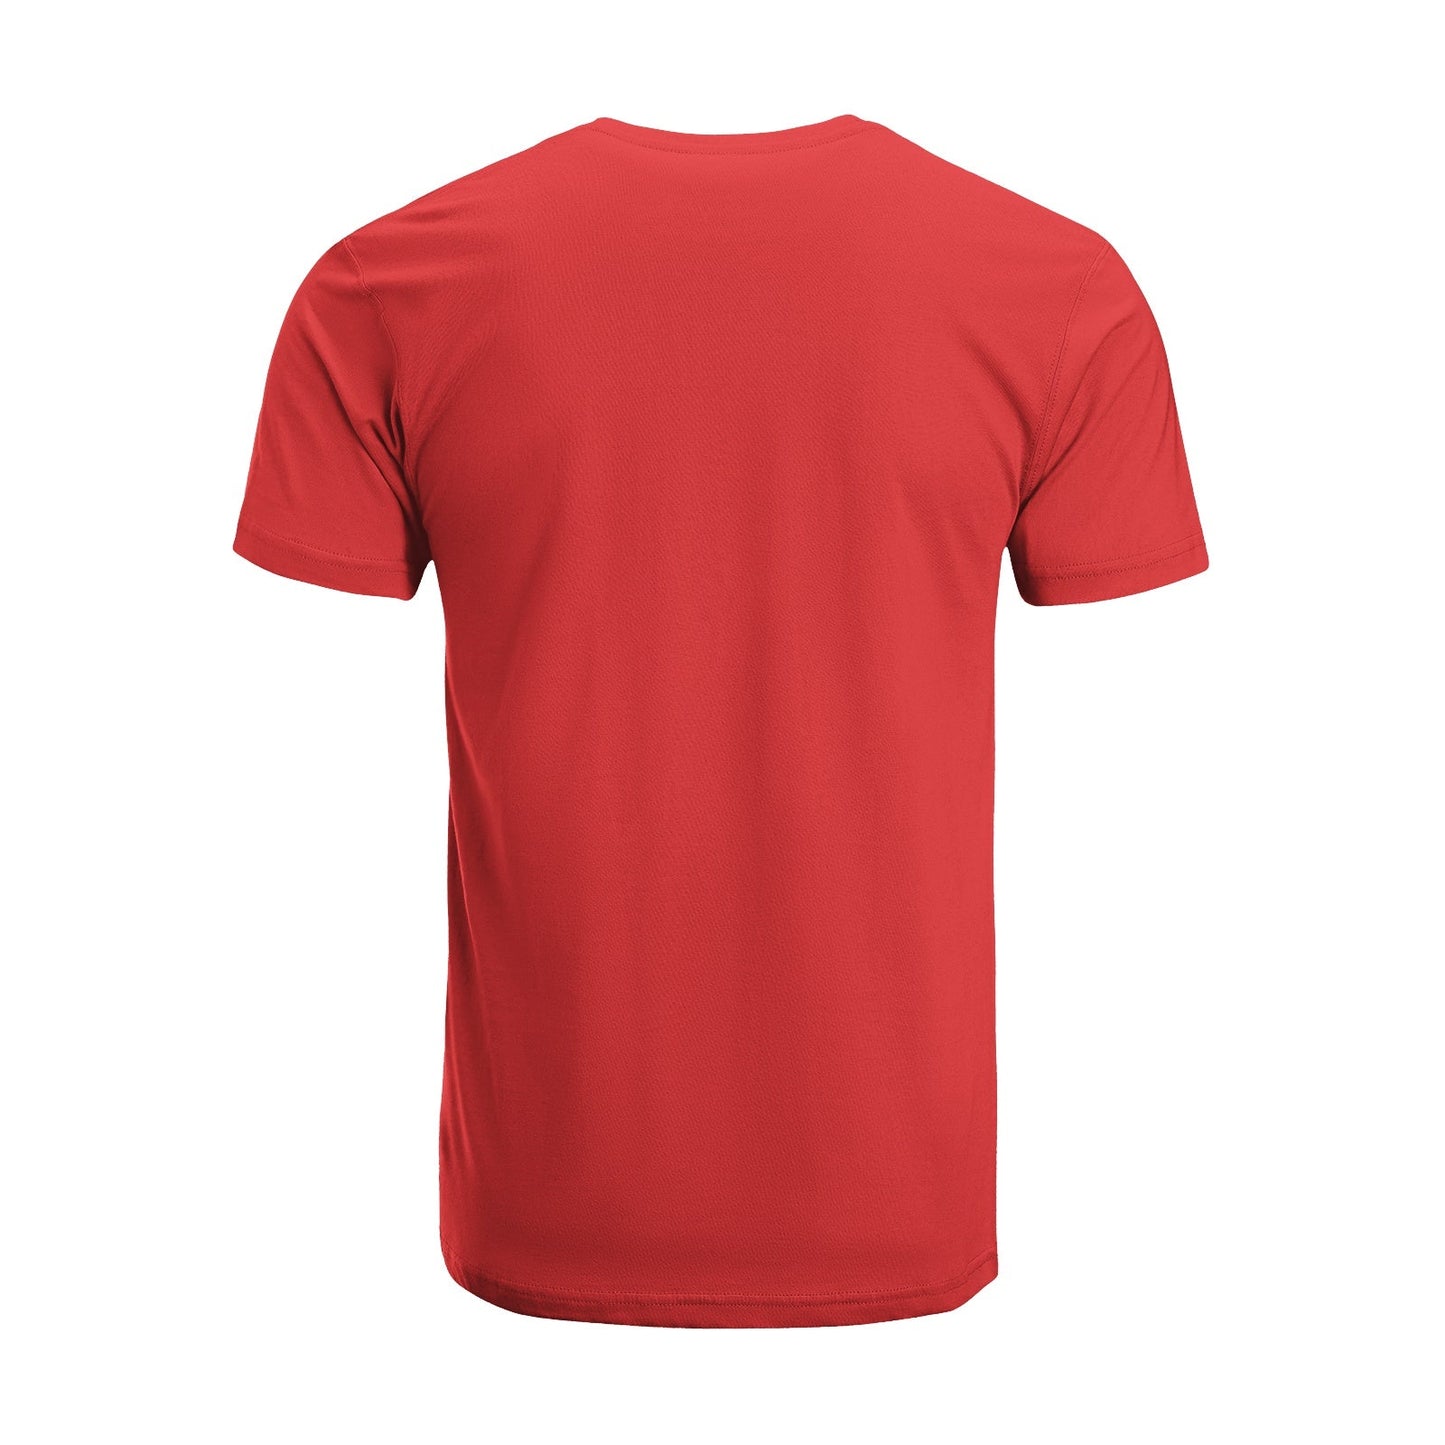 Unisex Short Sleeve Crew Neck Cotton Jersey T-Shirt MOM 33